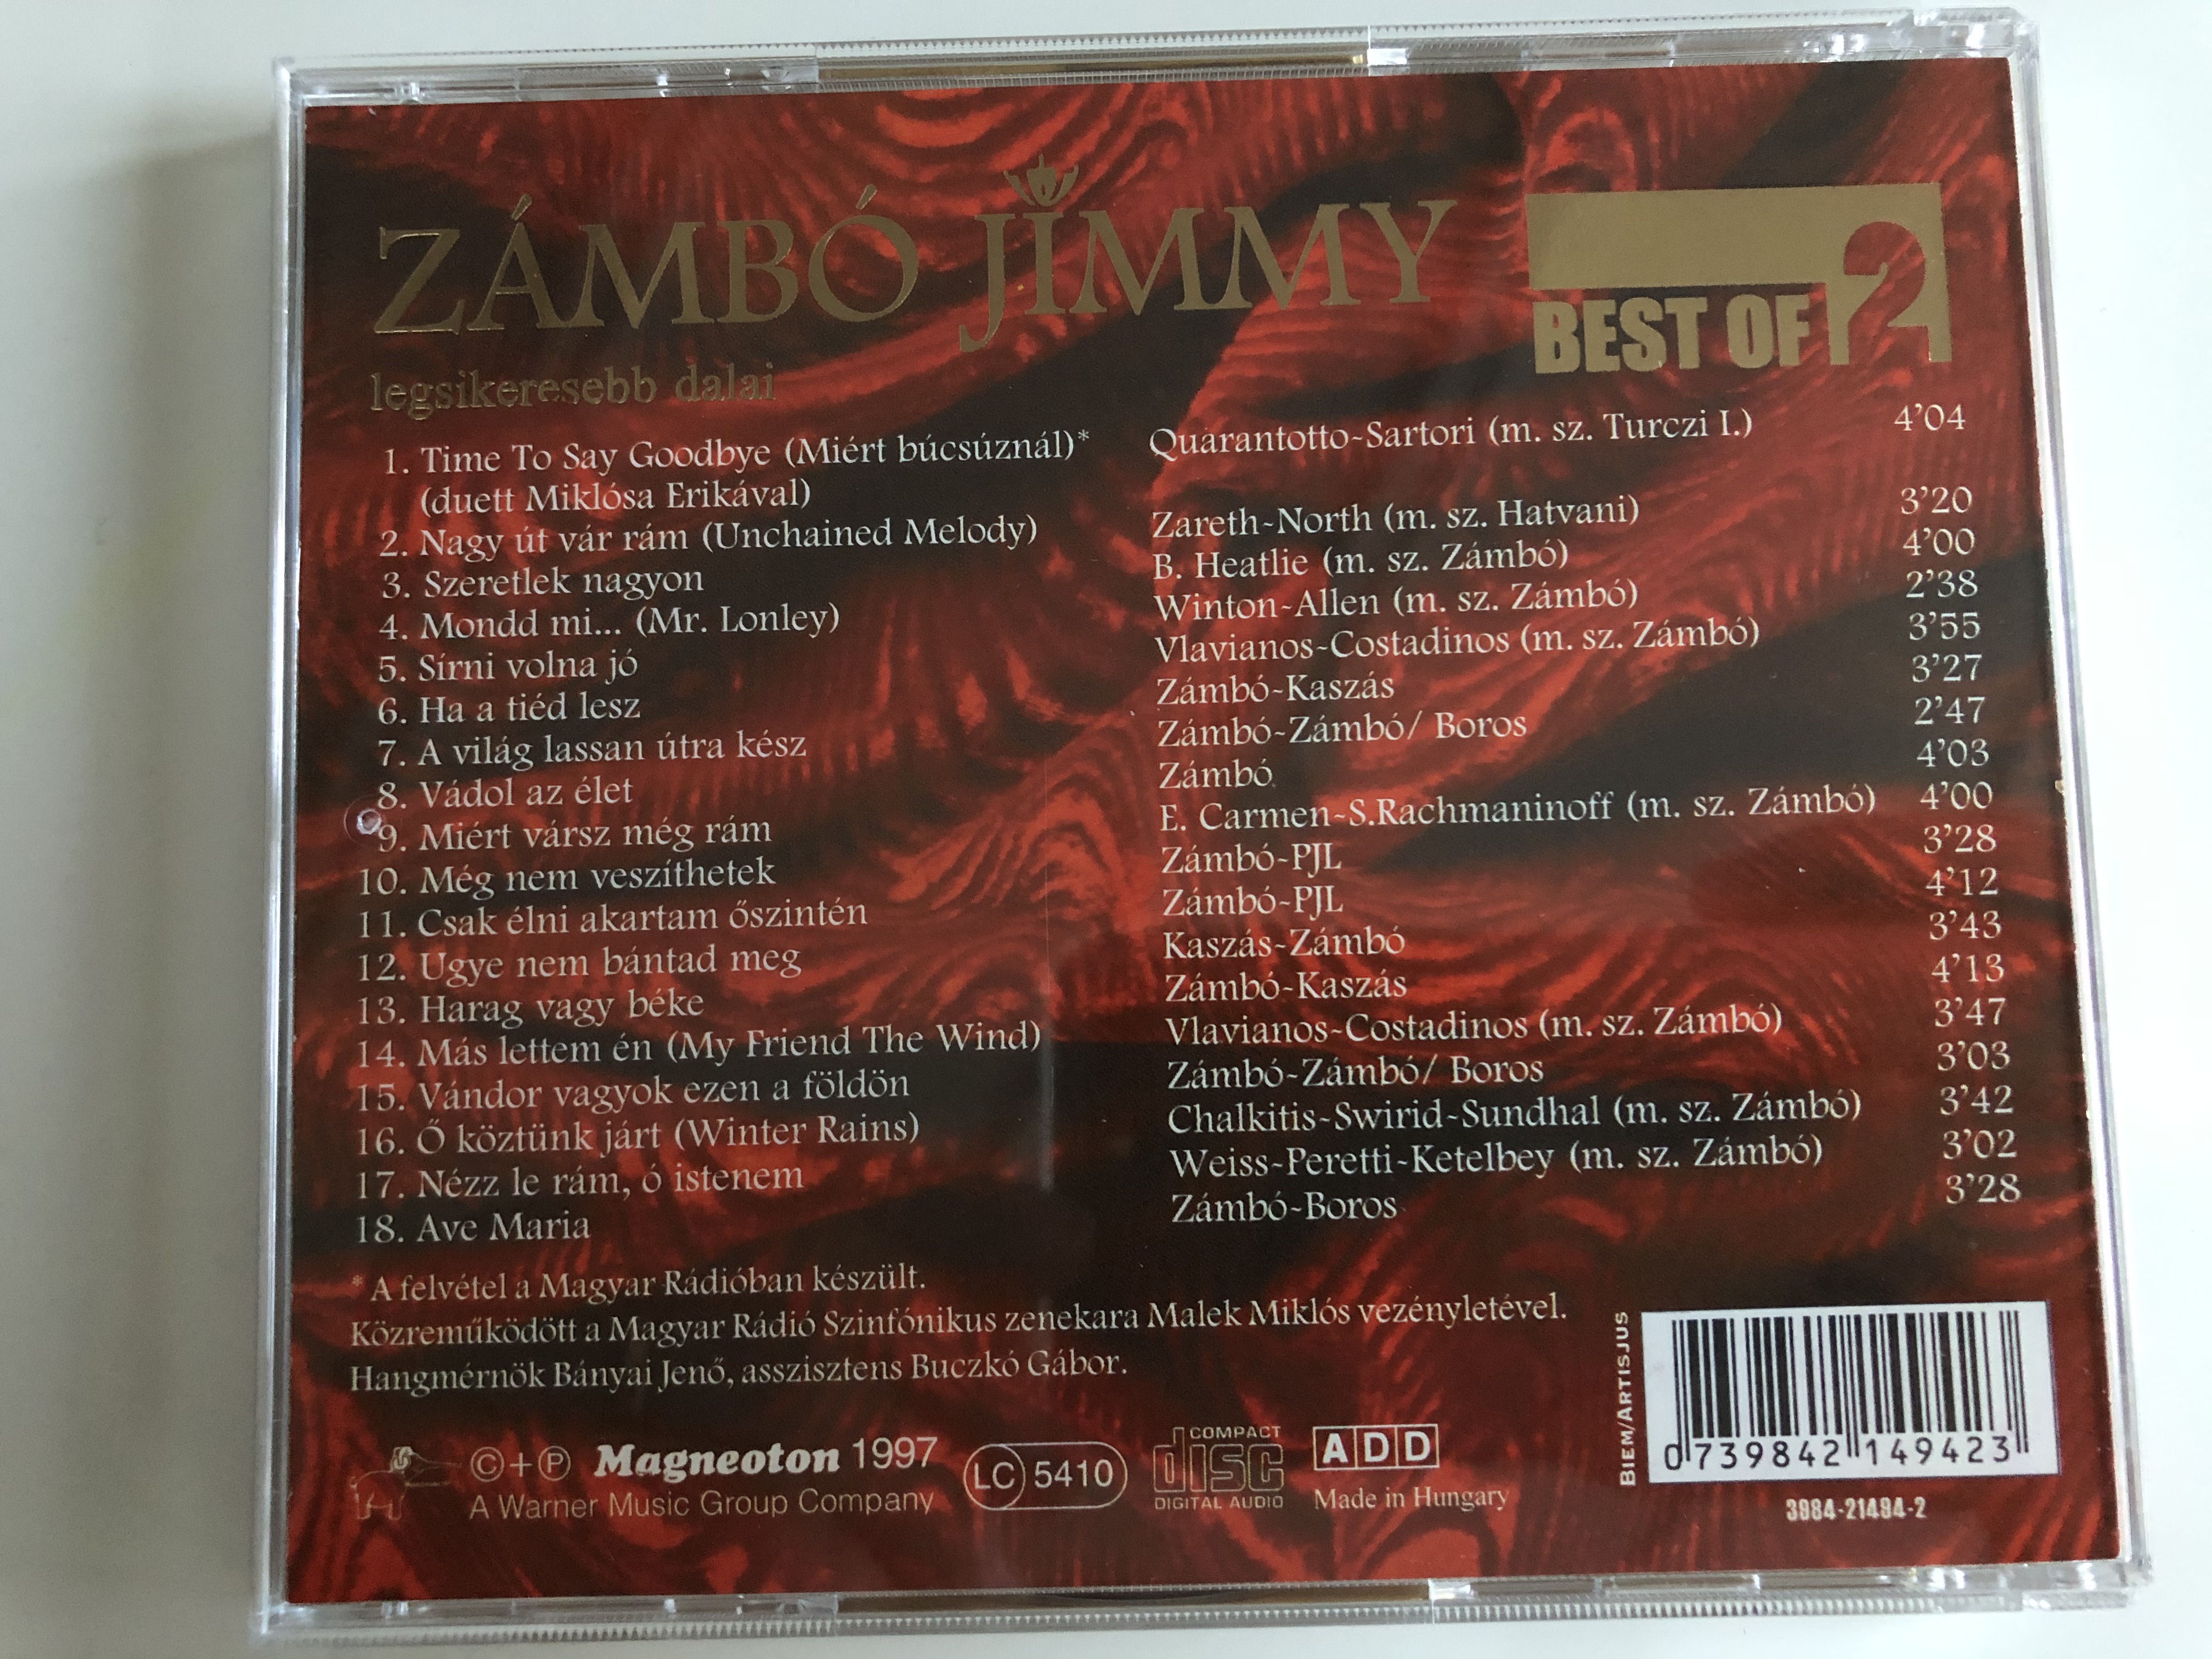 z-mb-jimmy-best-of-2-magneoton-audio-cd-1997-3984-21484-4-7-.jpg